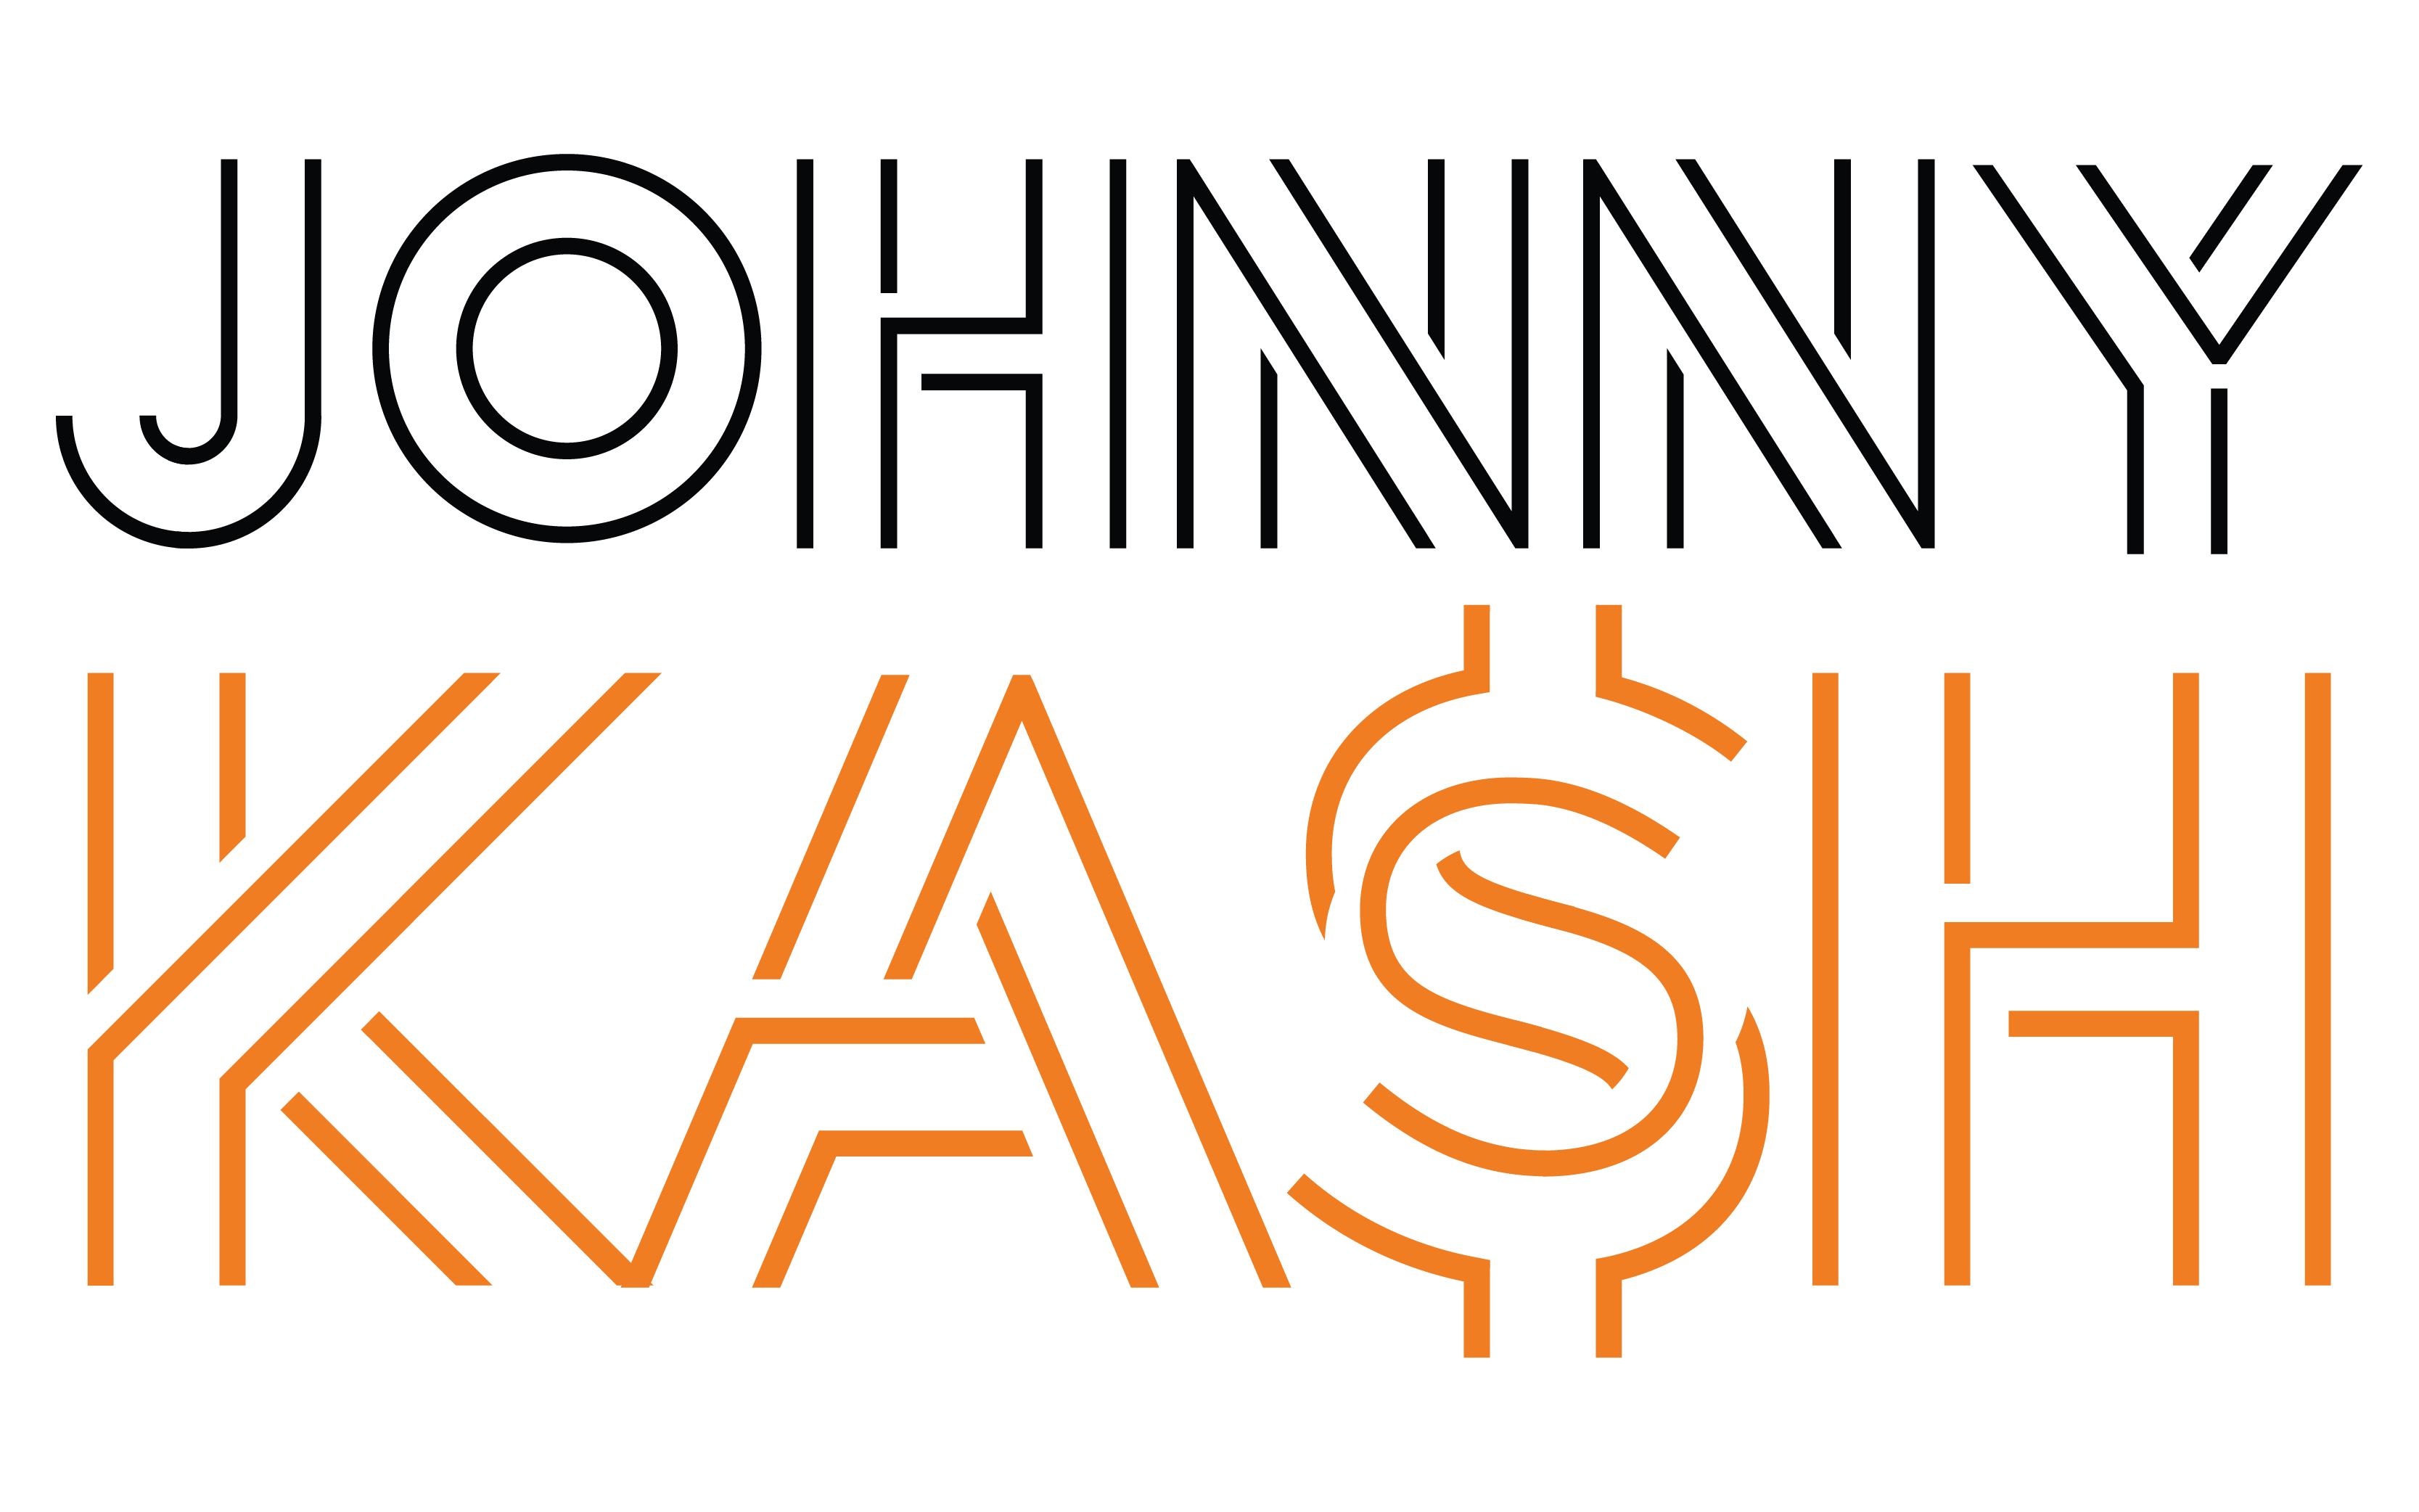 Johnny Kash Casino Australia